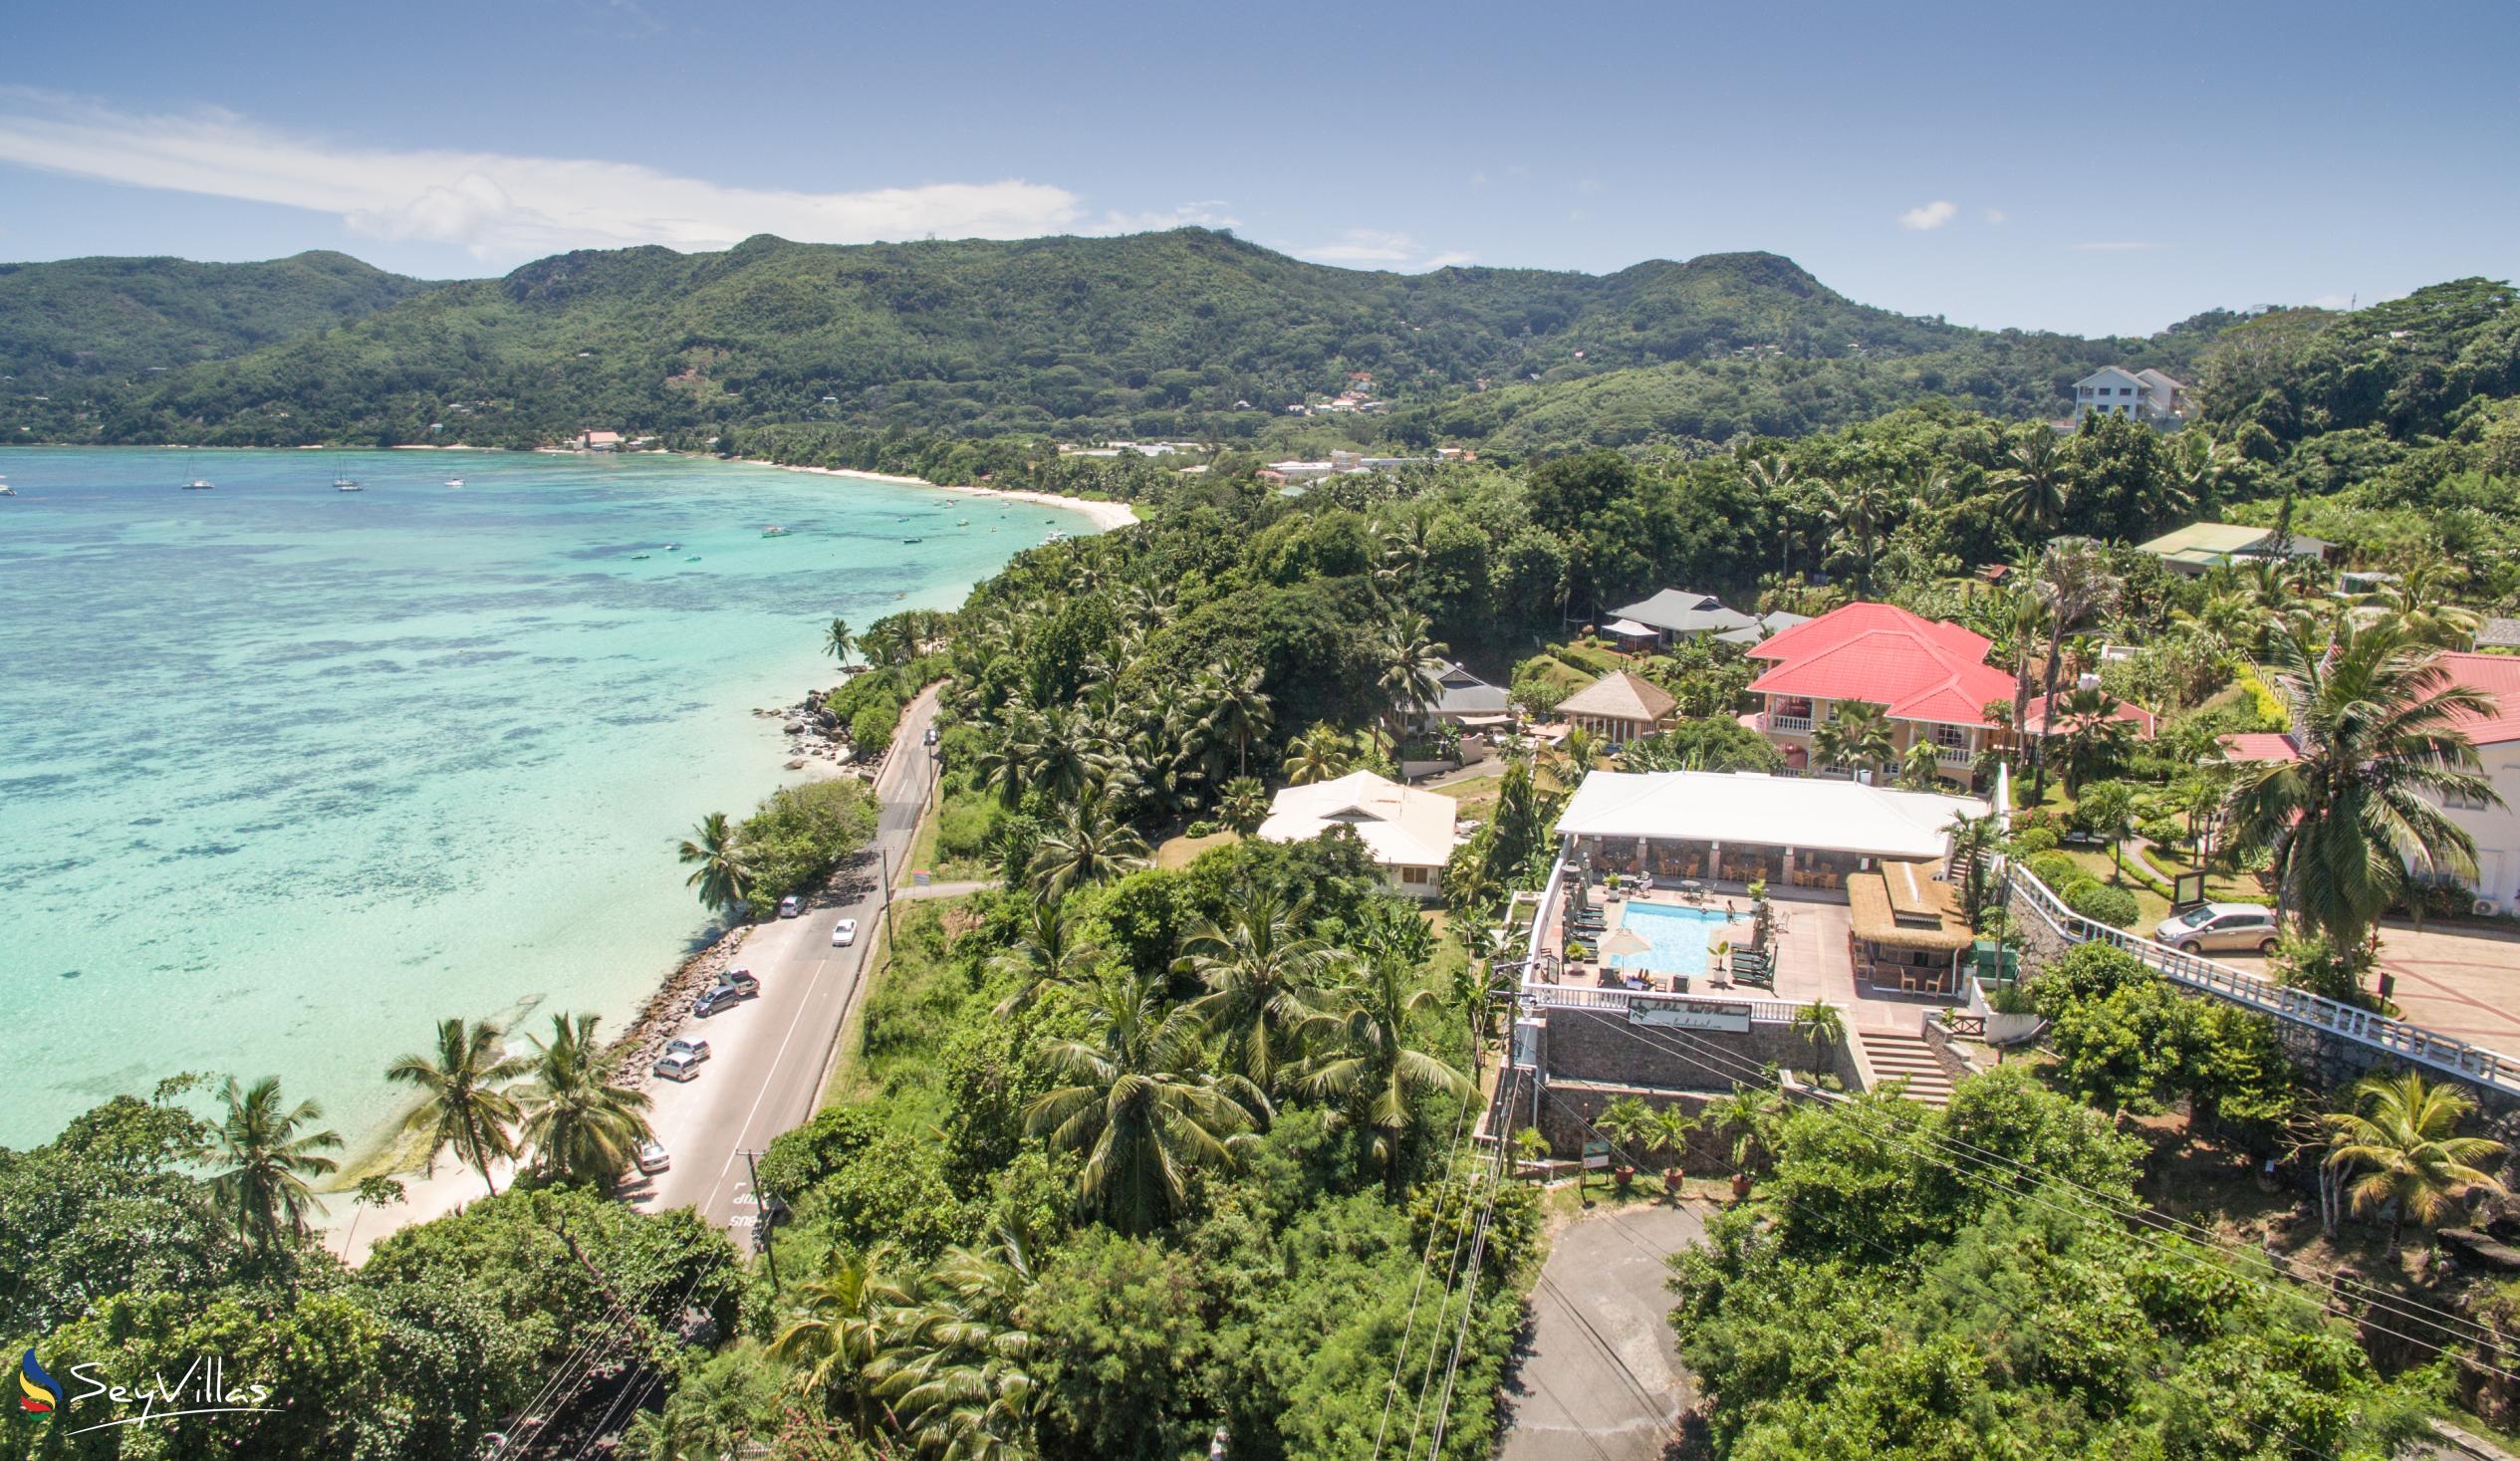 Foto 5: Le Relax Hotel & Restaurant - Aussenbereich - Mahé (Seychellen)